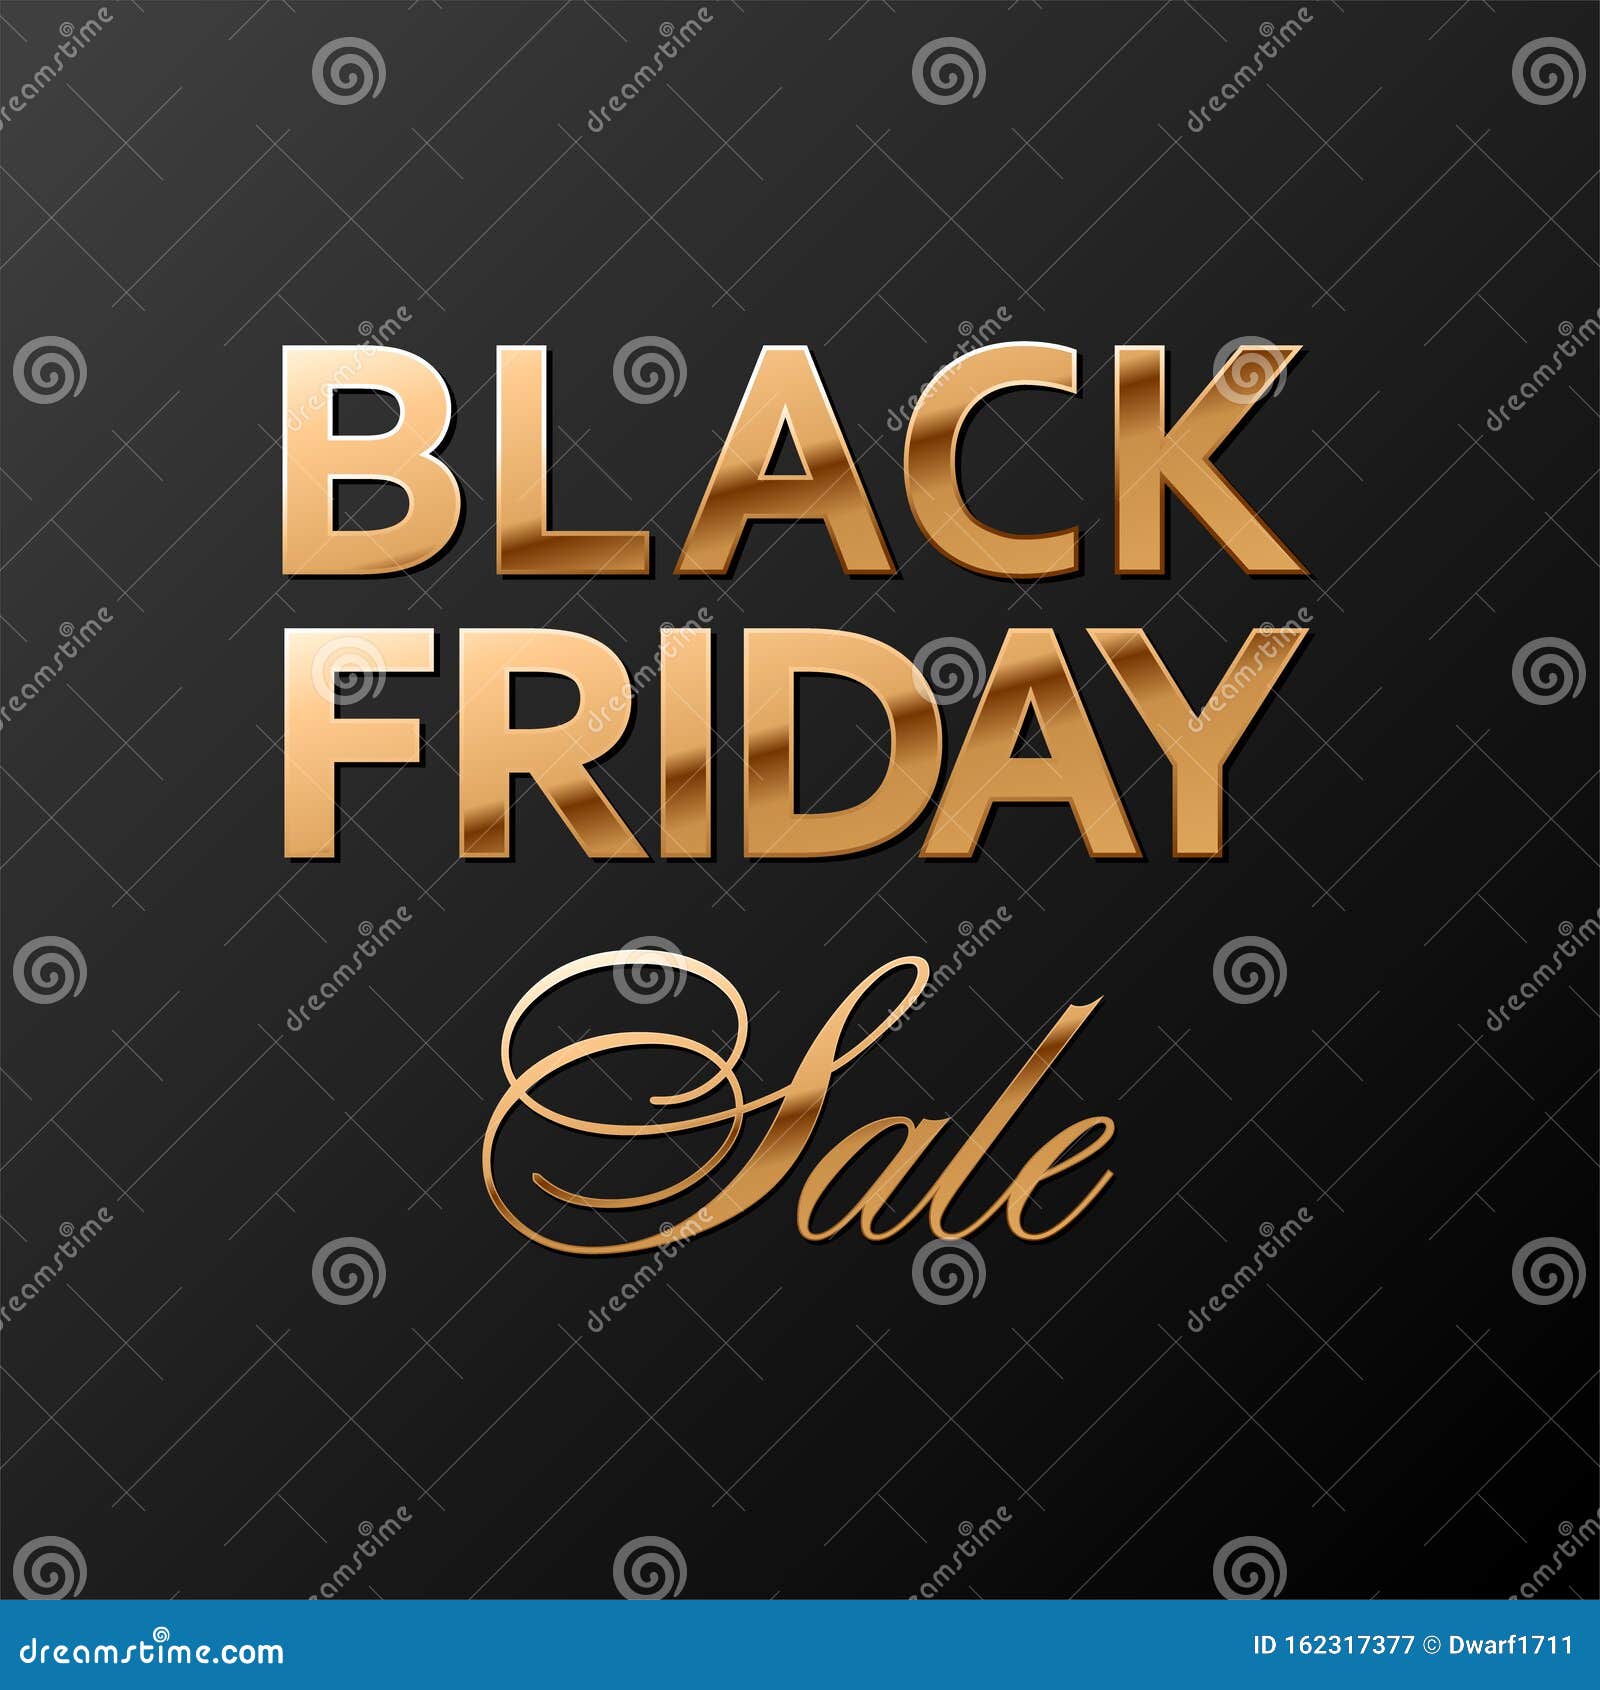 Black friday sale golden lettering on black background vector square banner or social media post template.
